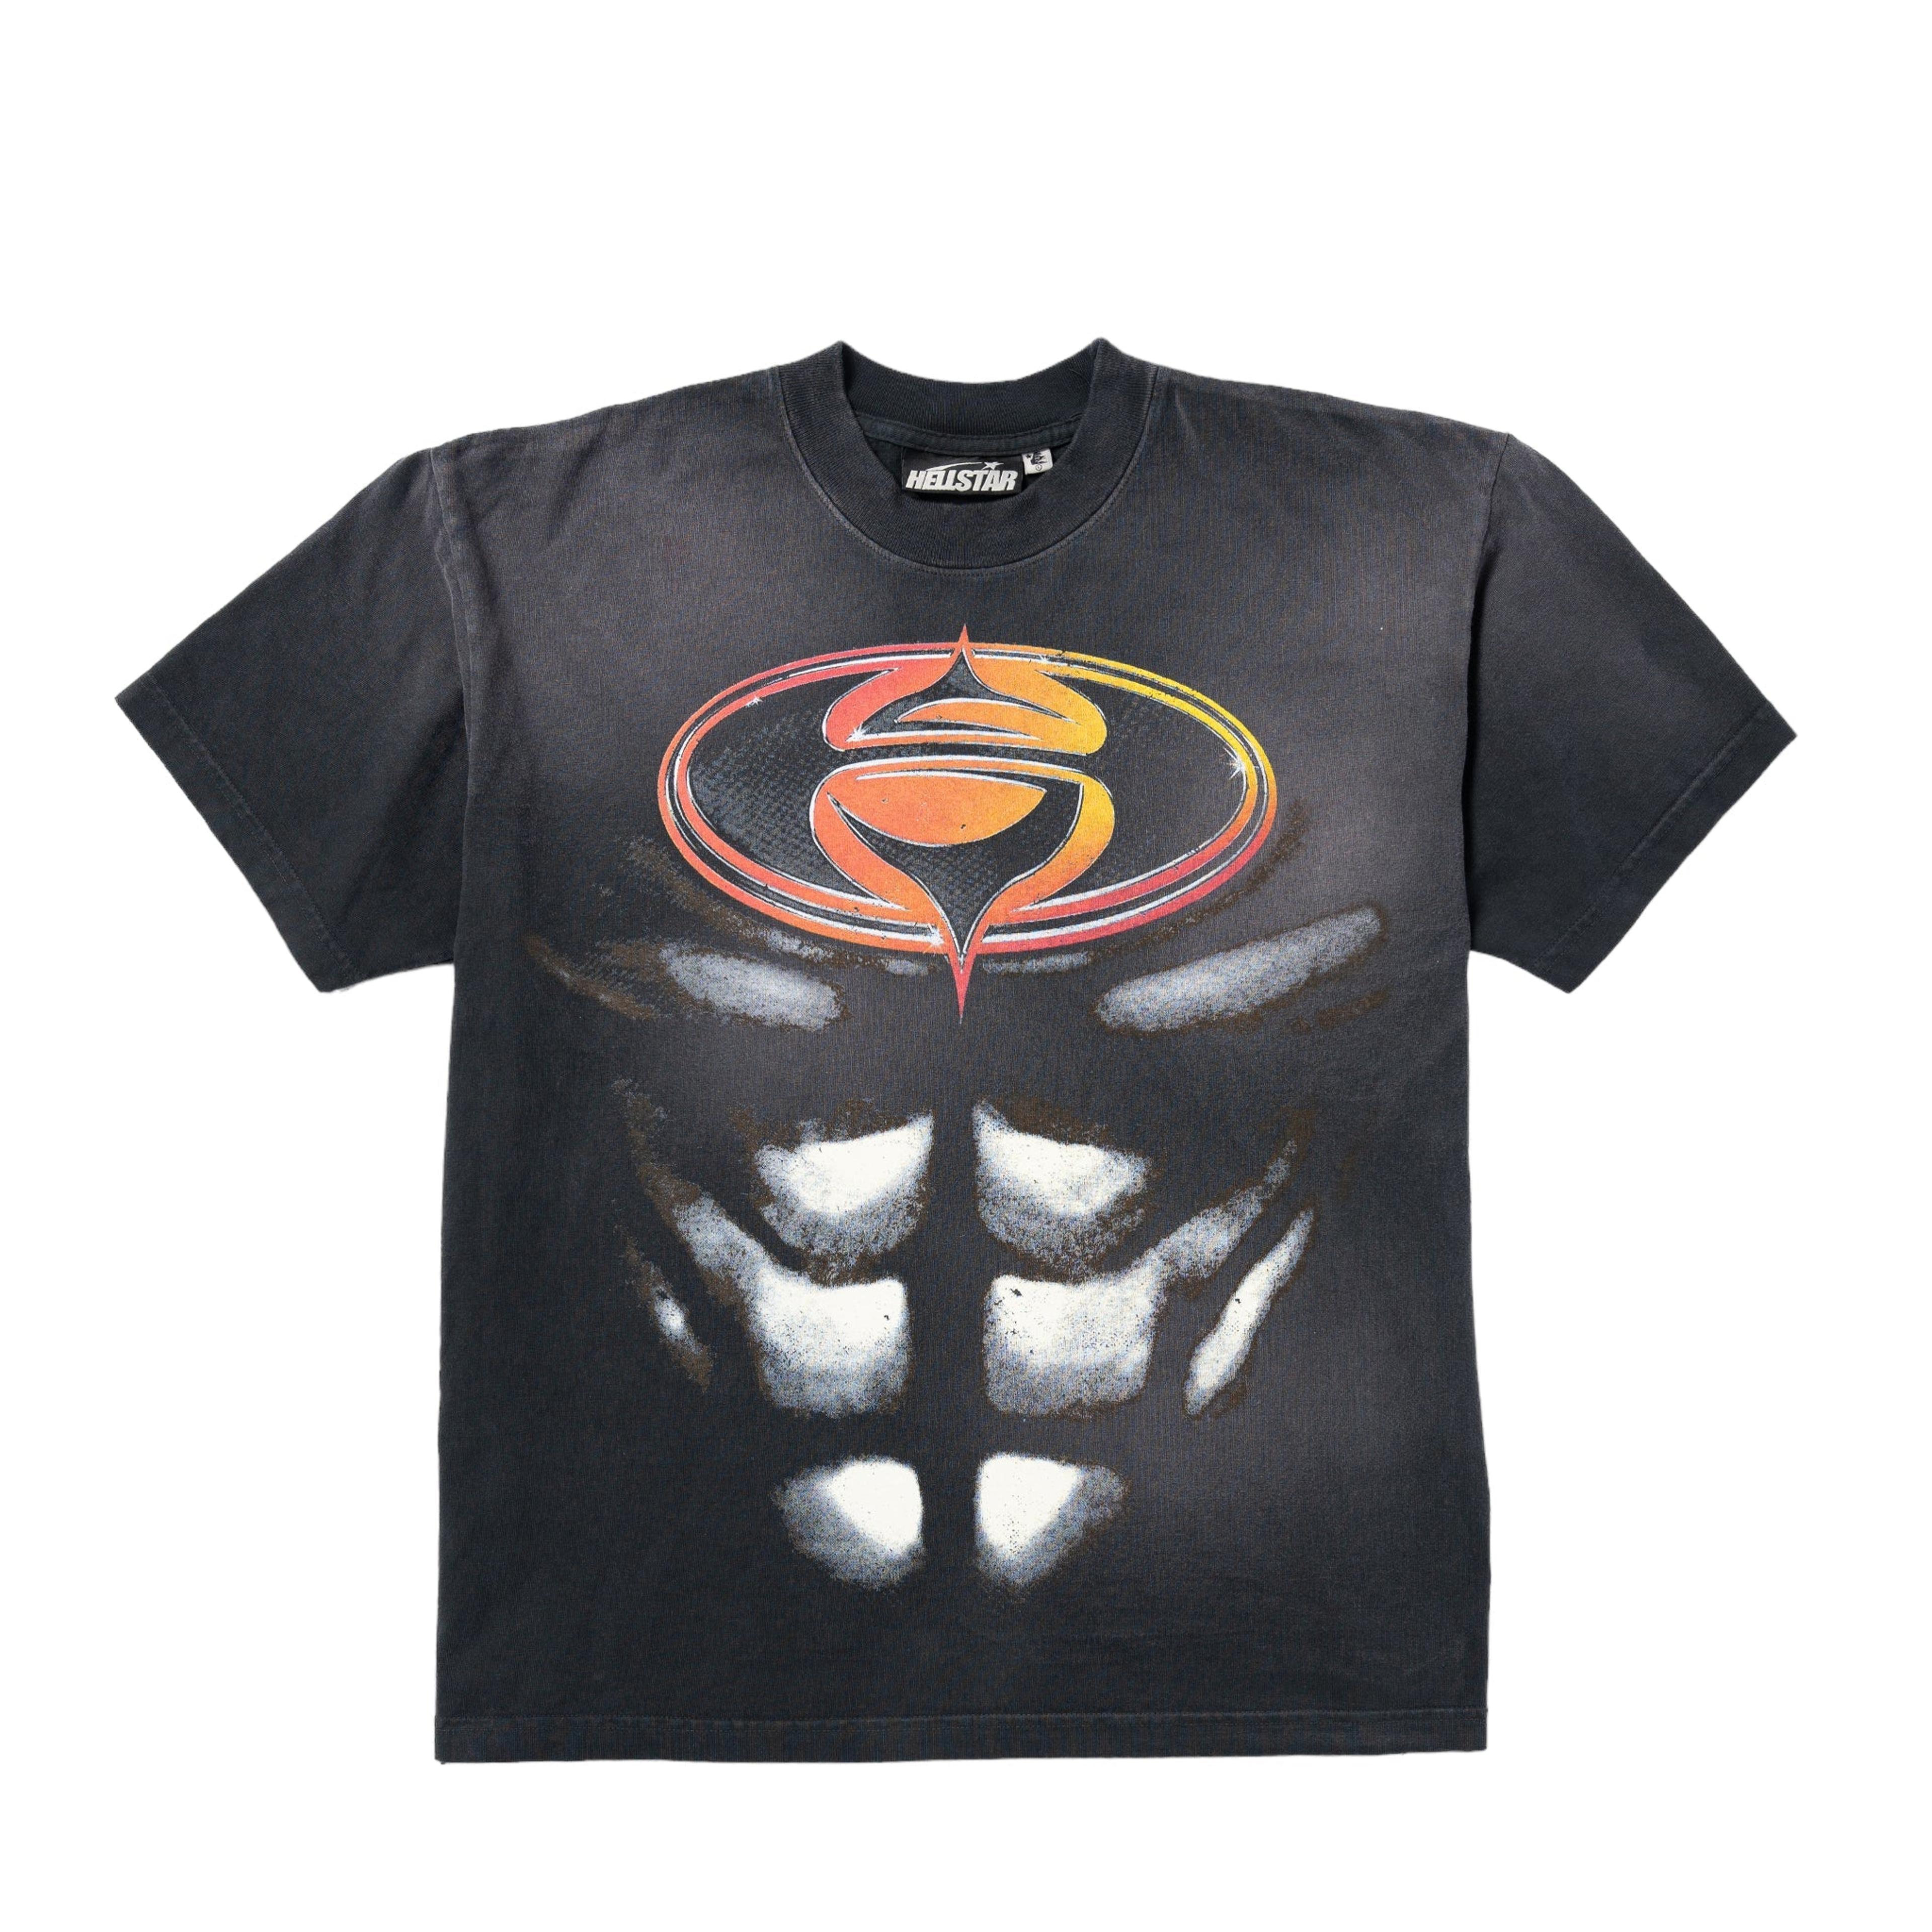 Hellstar Superhero T-Shirt